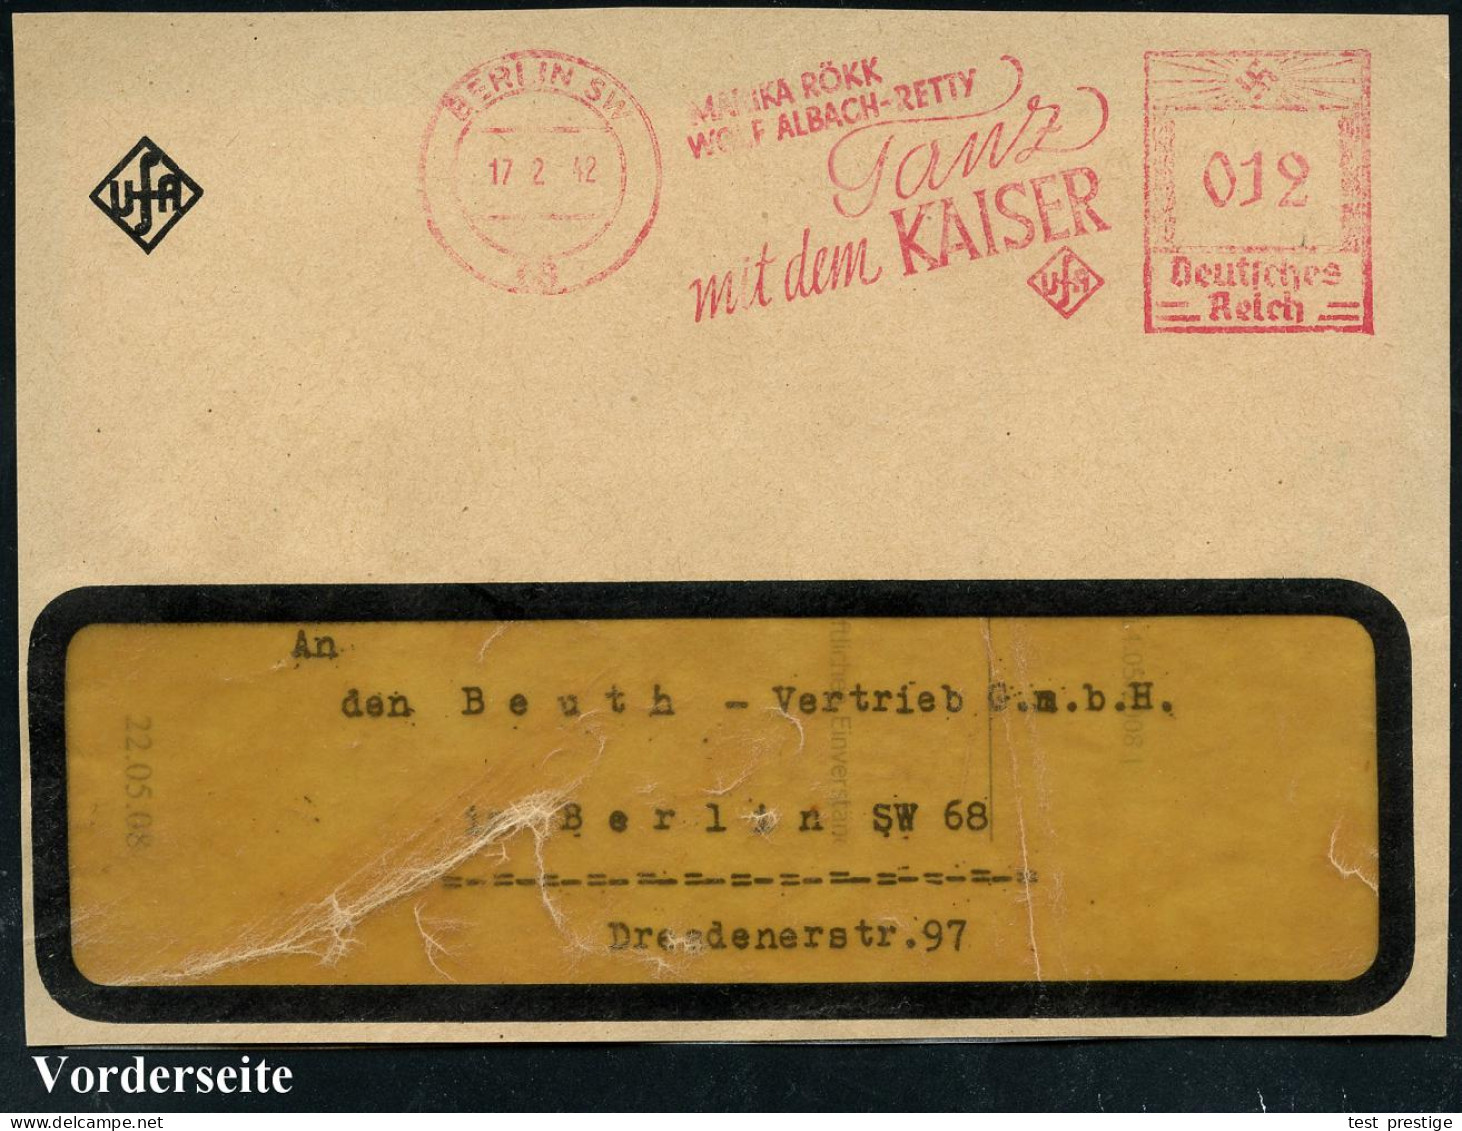 BERLIN SW 68/ MARIKA RÖKK/ W.ALBACH-RETTY/ Tanz/ Mit Dem KAISER/ UfA 1942 (17.2.) Seltener AFS Francotyp = Film über Kai - Dance